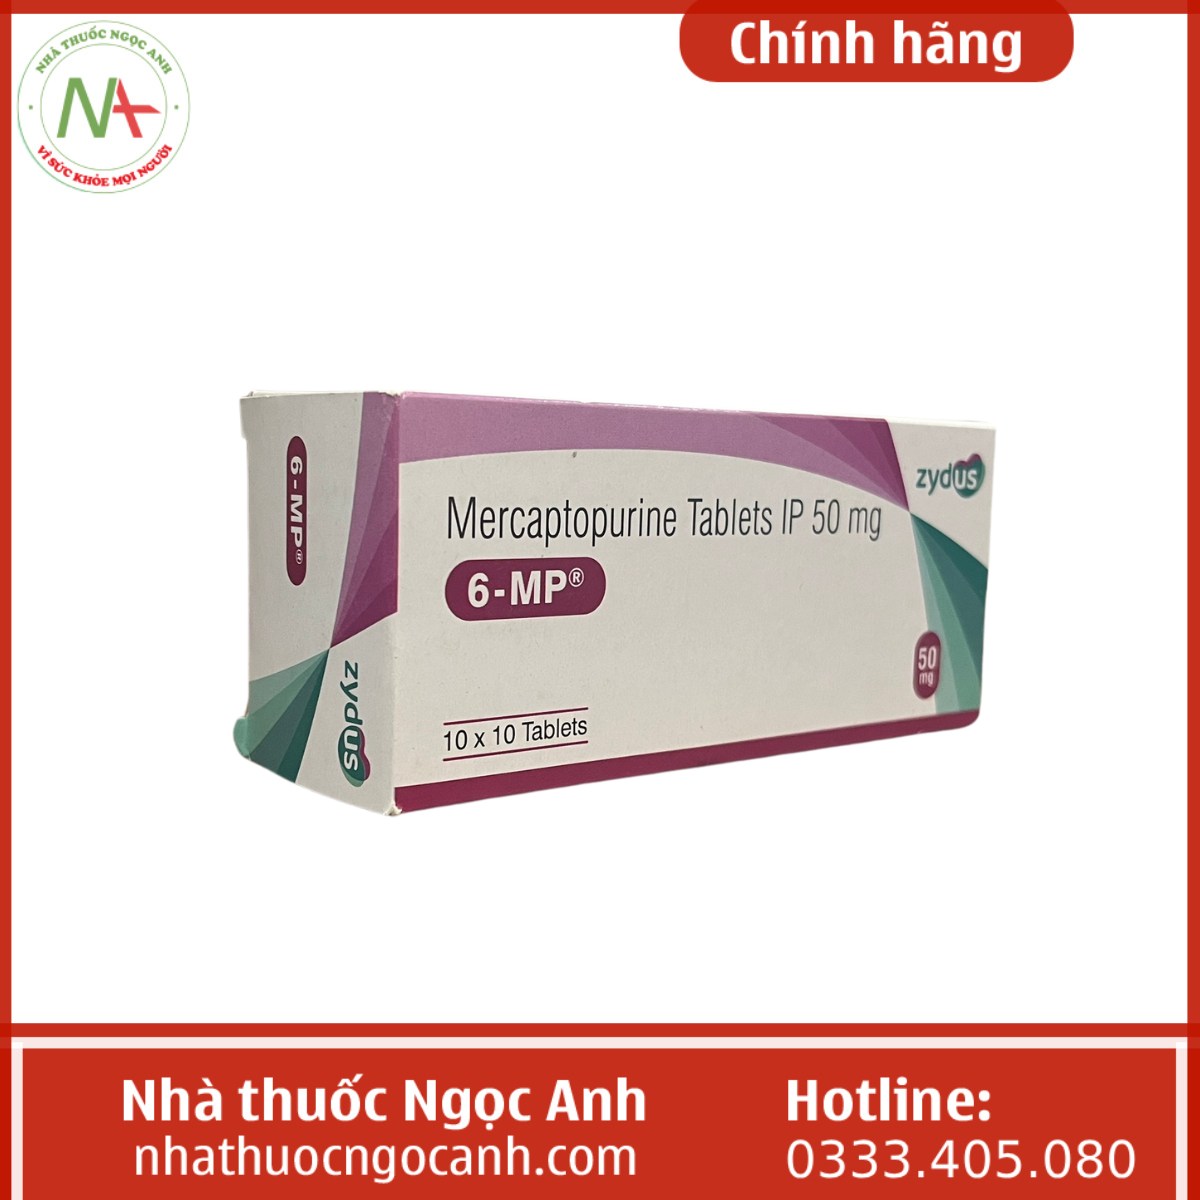 Mercaptopurine Tablets IP 50mg 6-MP